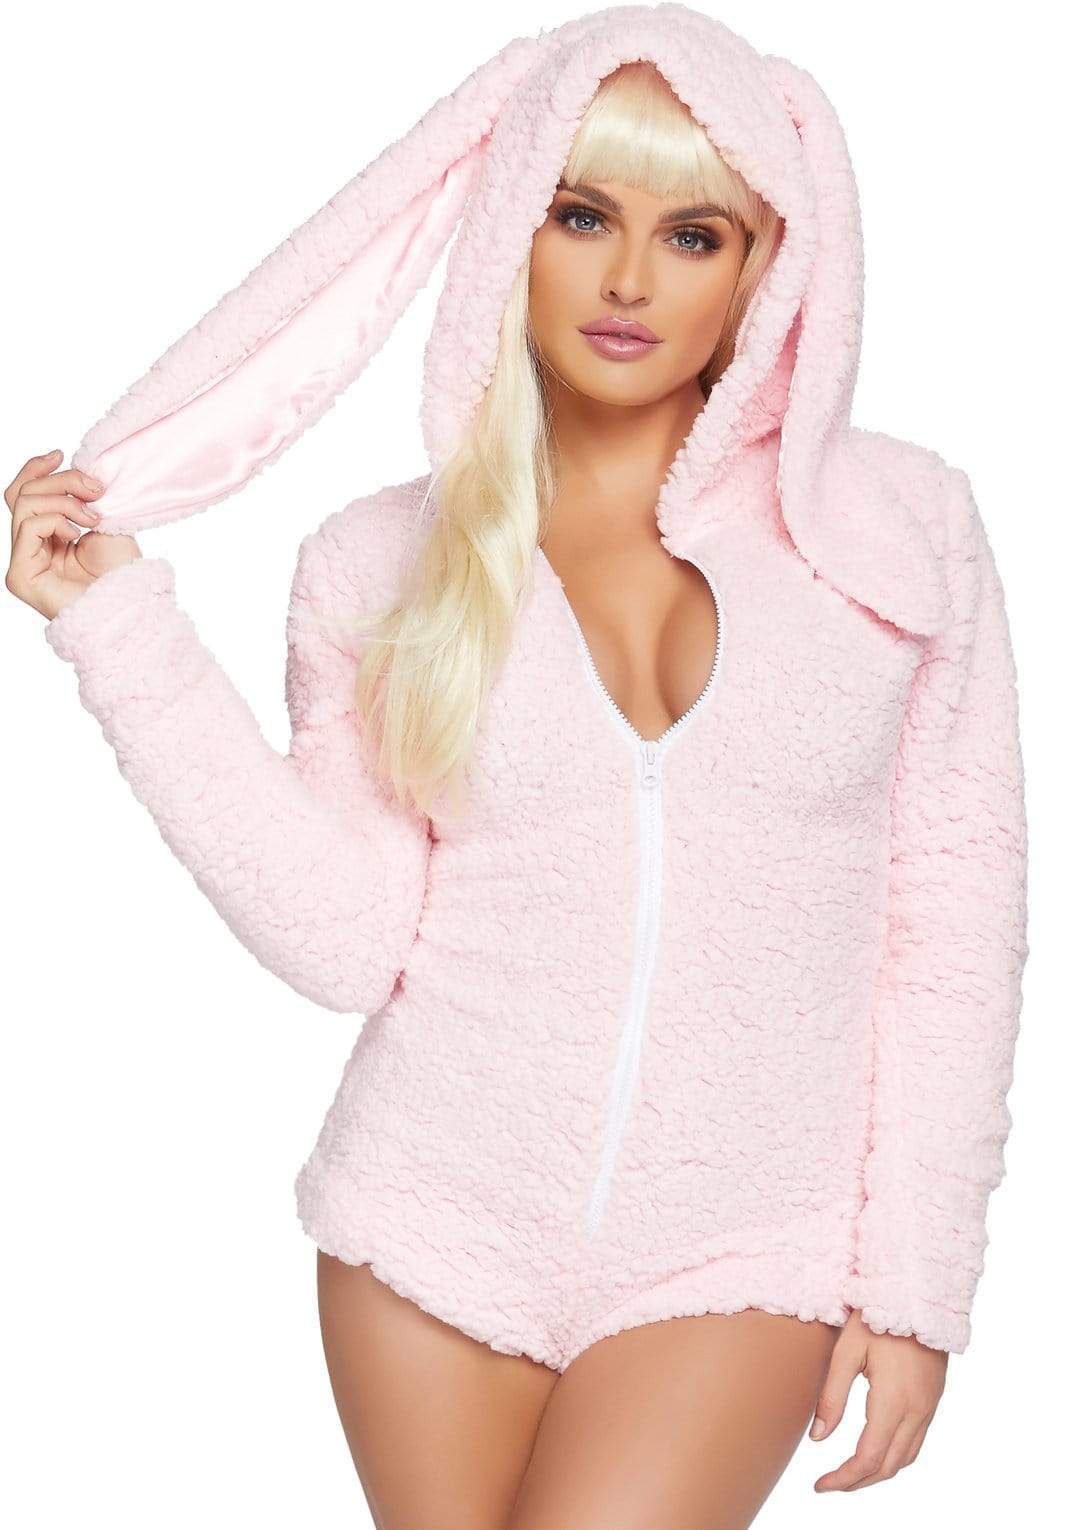 Cuddle Bunny Sexy Pajama Adult Costume